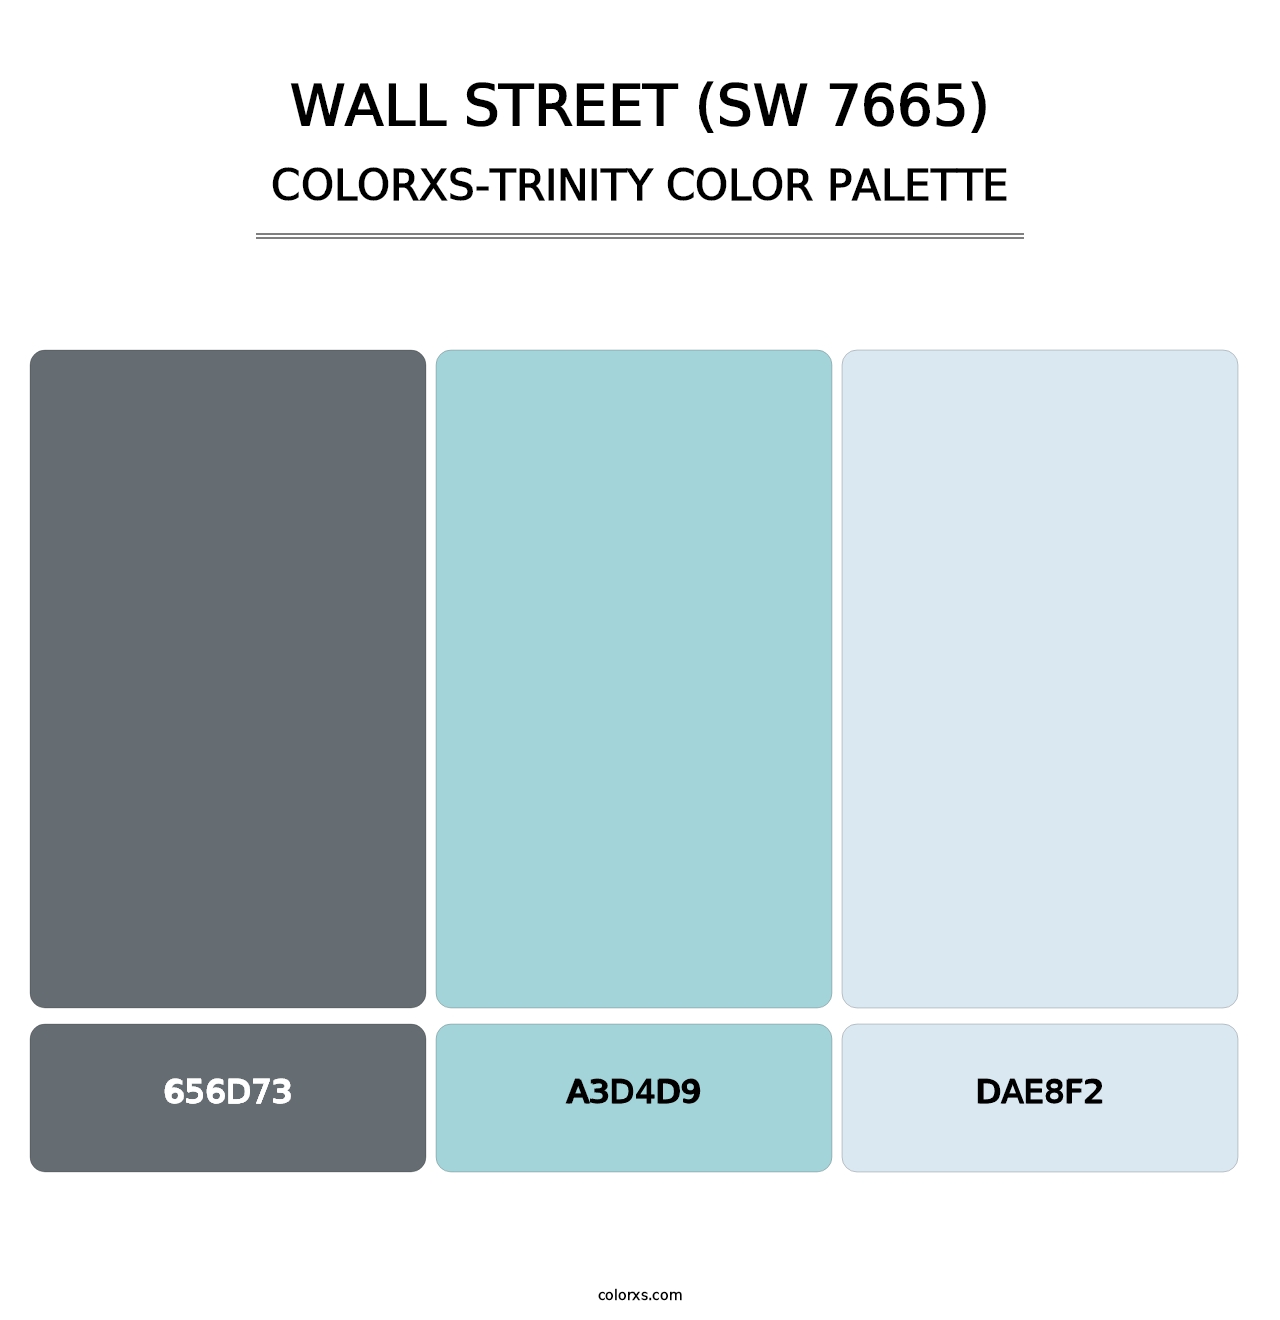 Wall Street (SW 7665) - Colorxs Trinity Palette